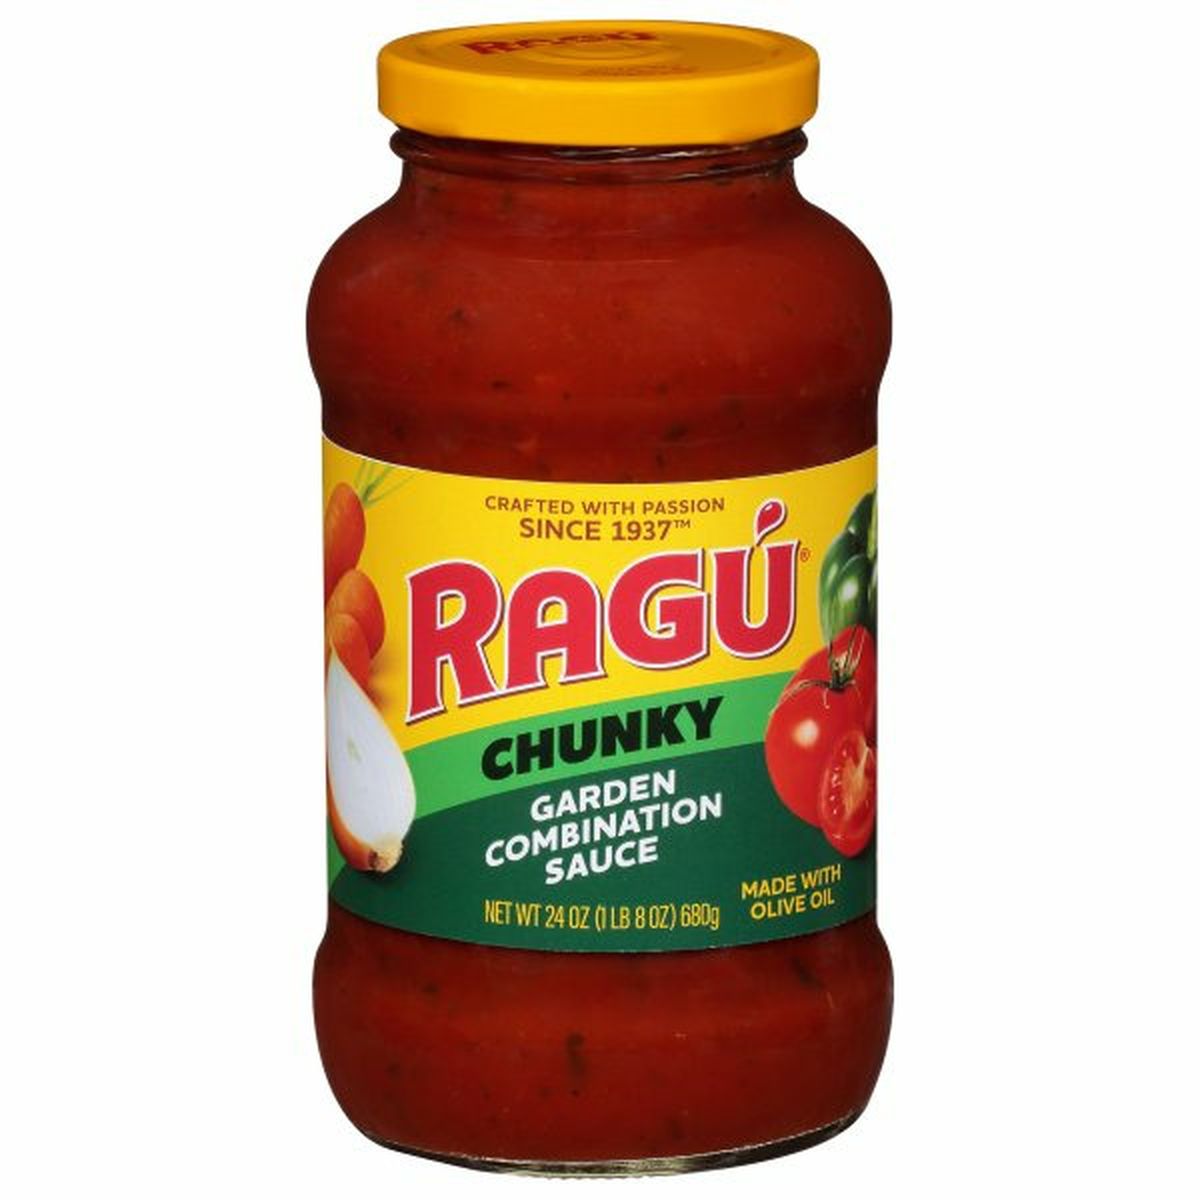 Calories in Ragu Sauce, Chunky, Garden Combination